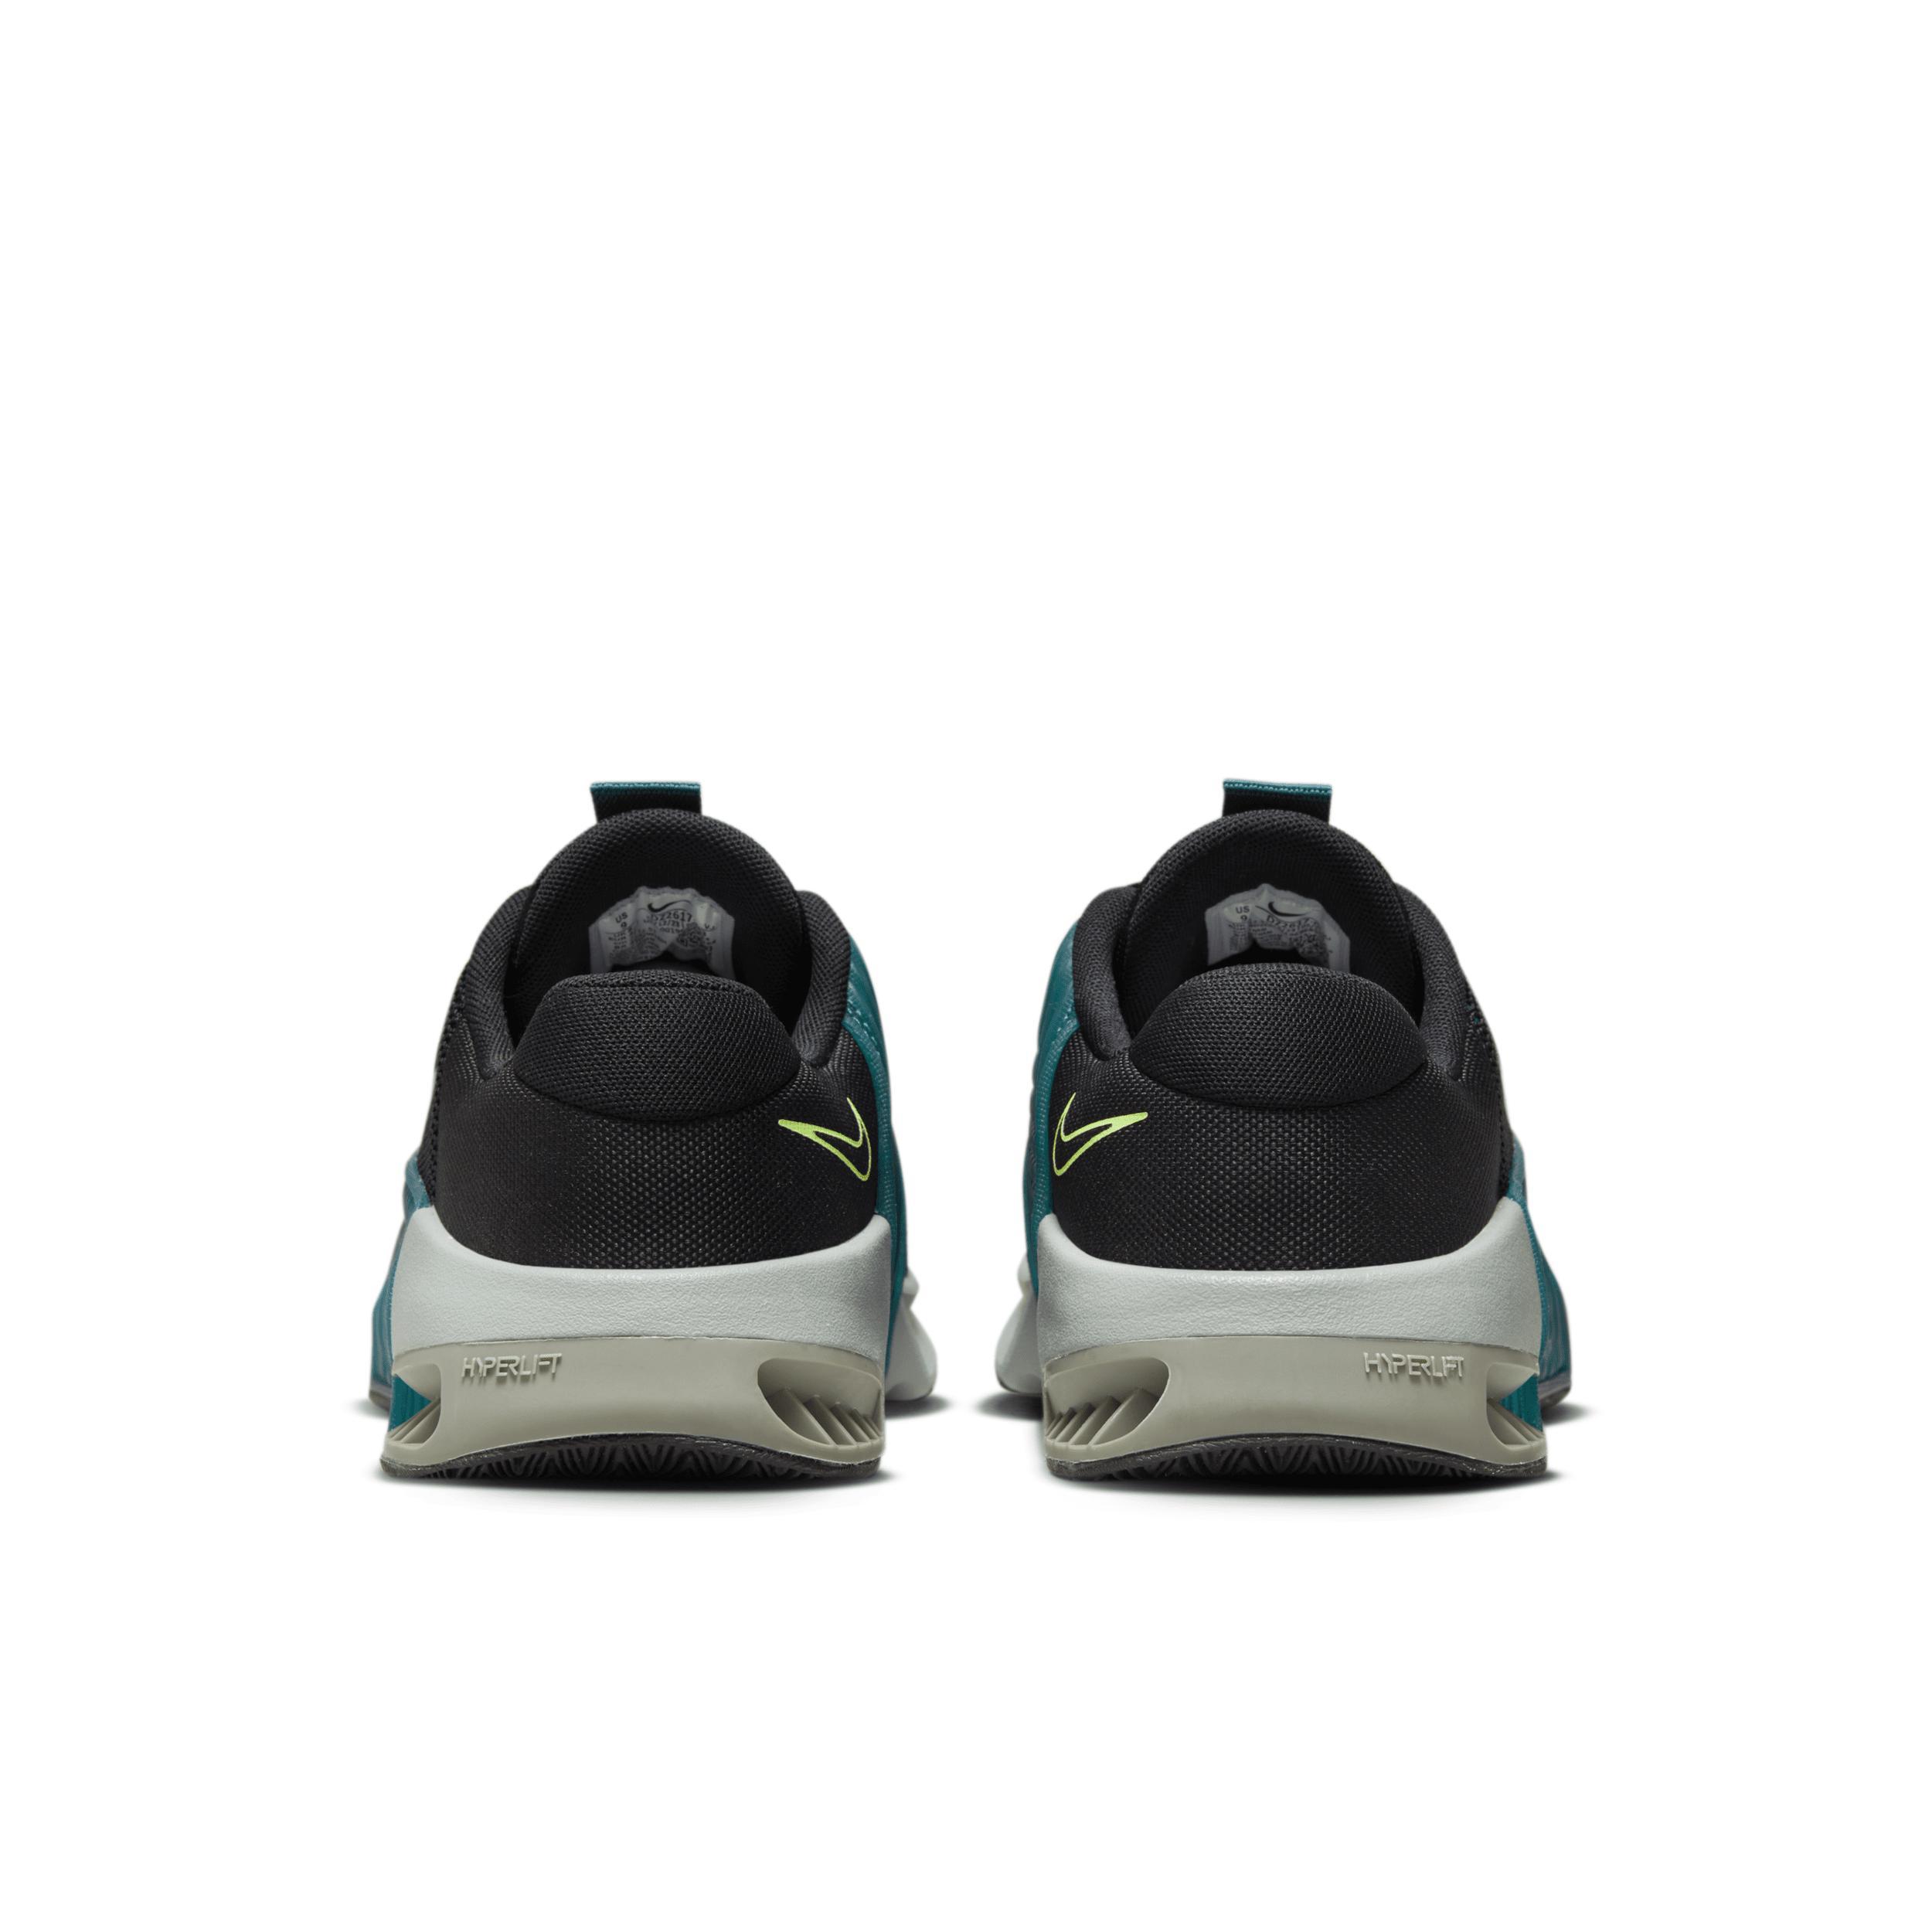 Nike Metcon 9 Training Shoe Product Image